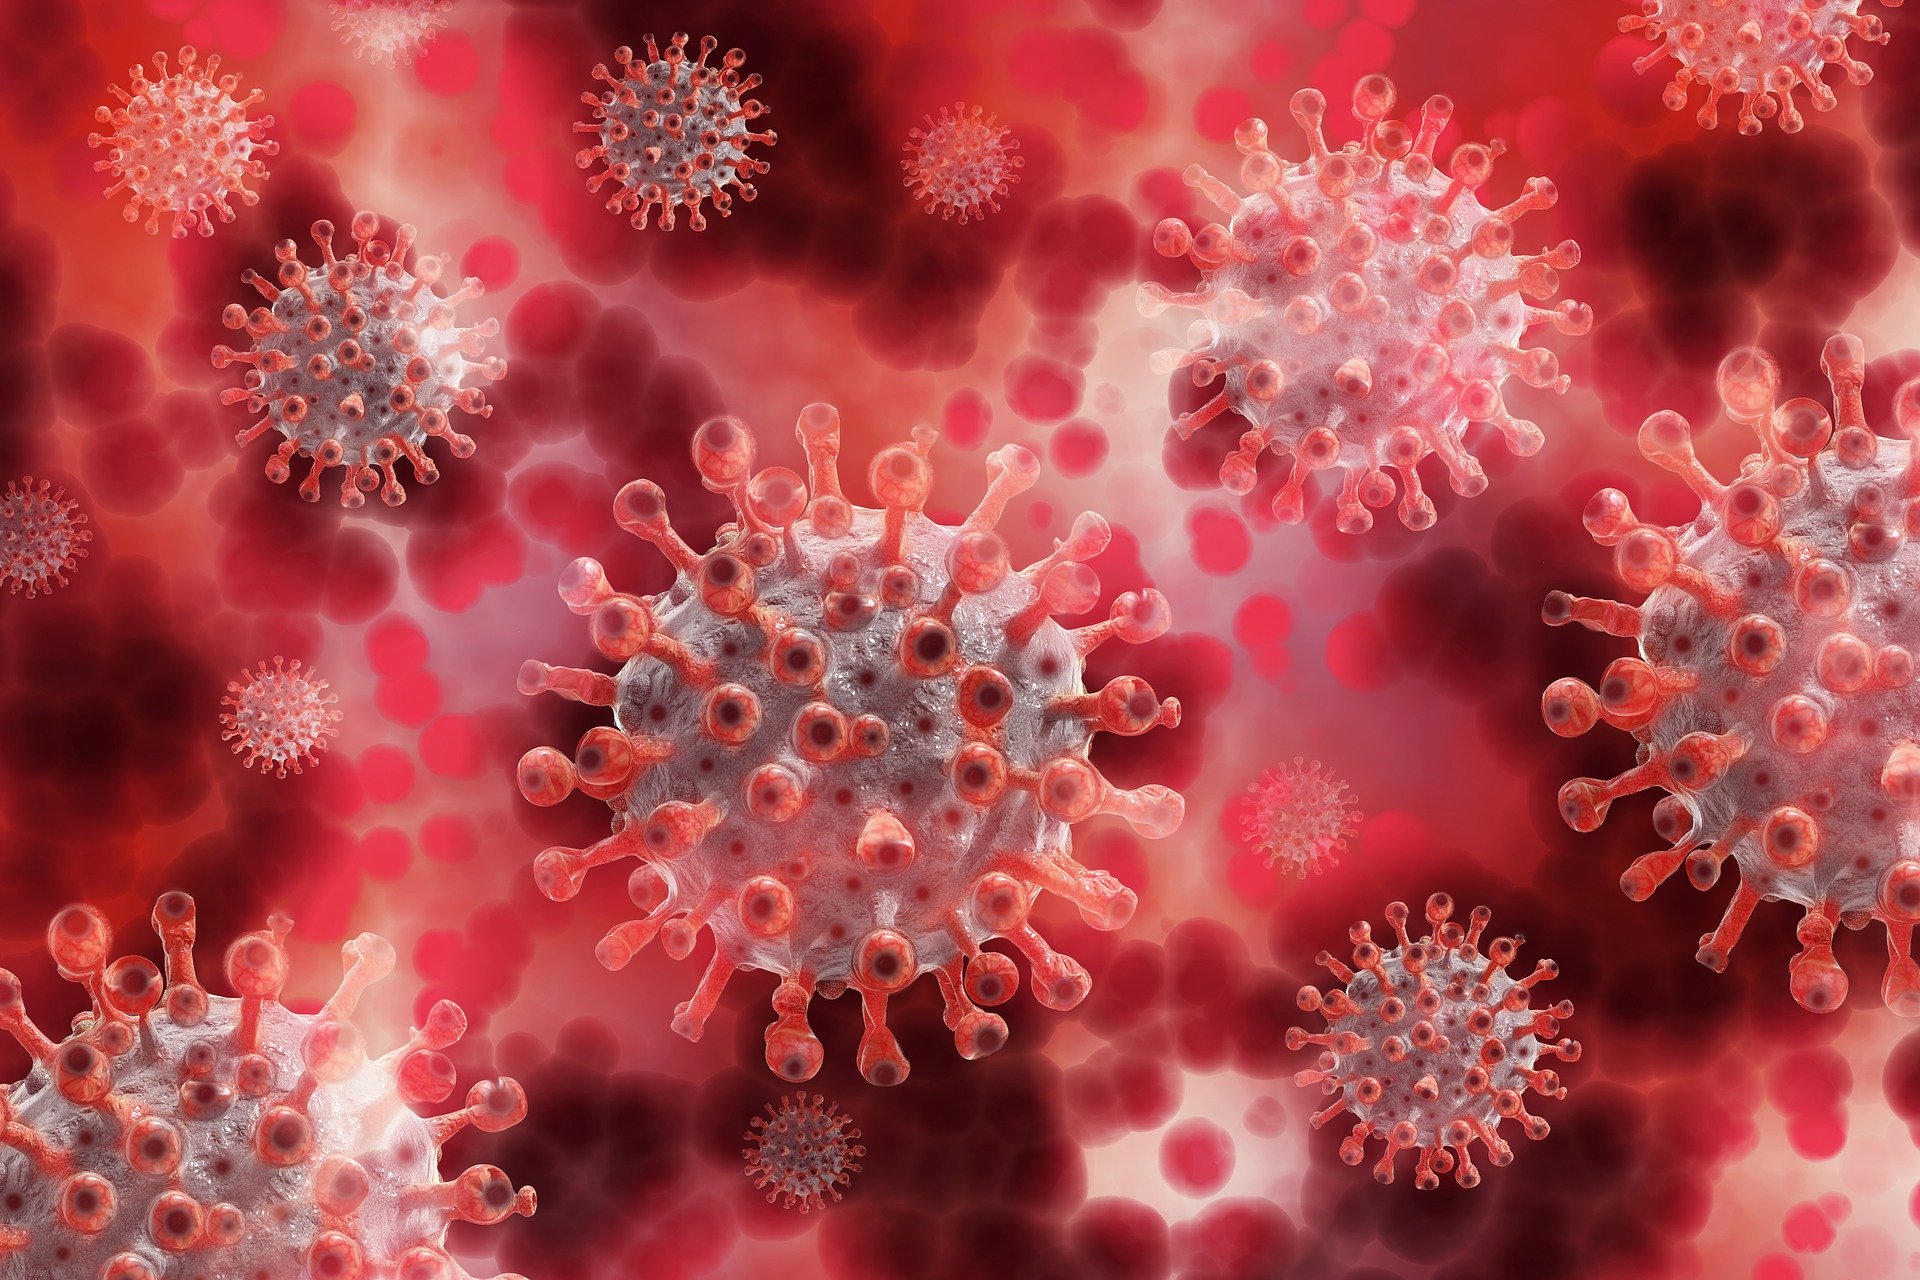 Coronavirus: in Toscana 824 nuovi casi, età media 45 anni. 20 decessi